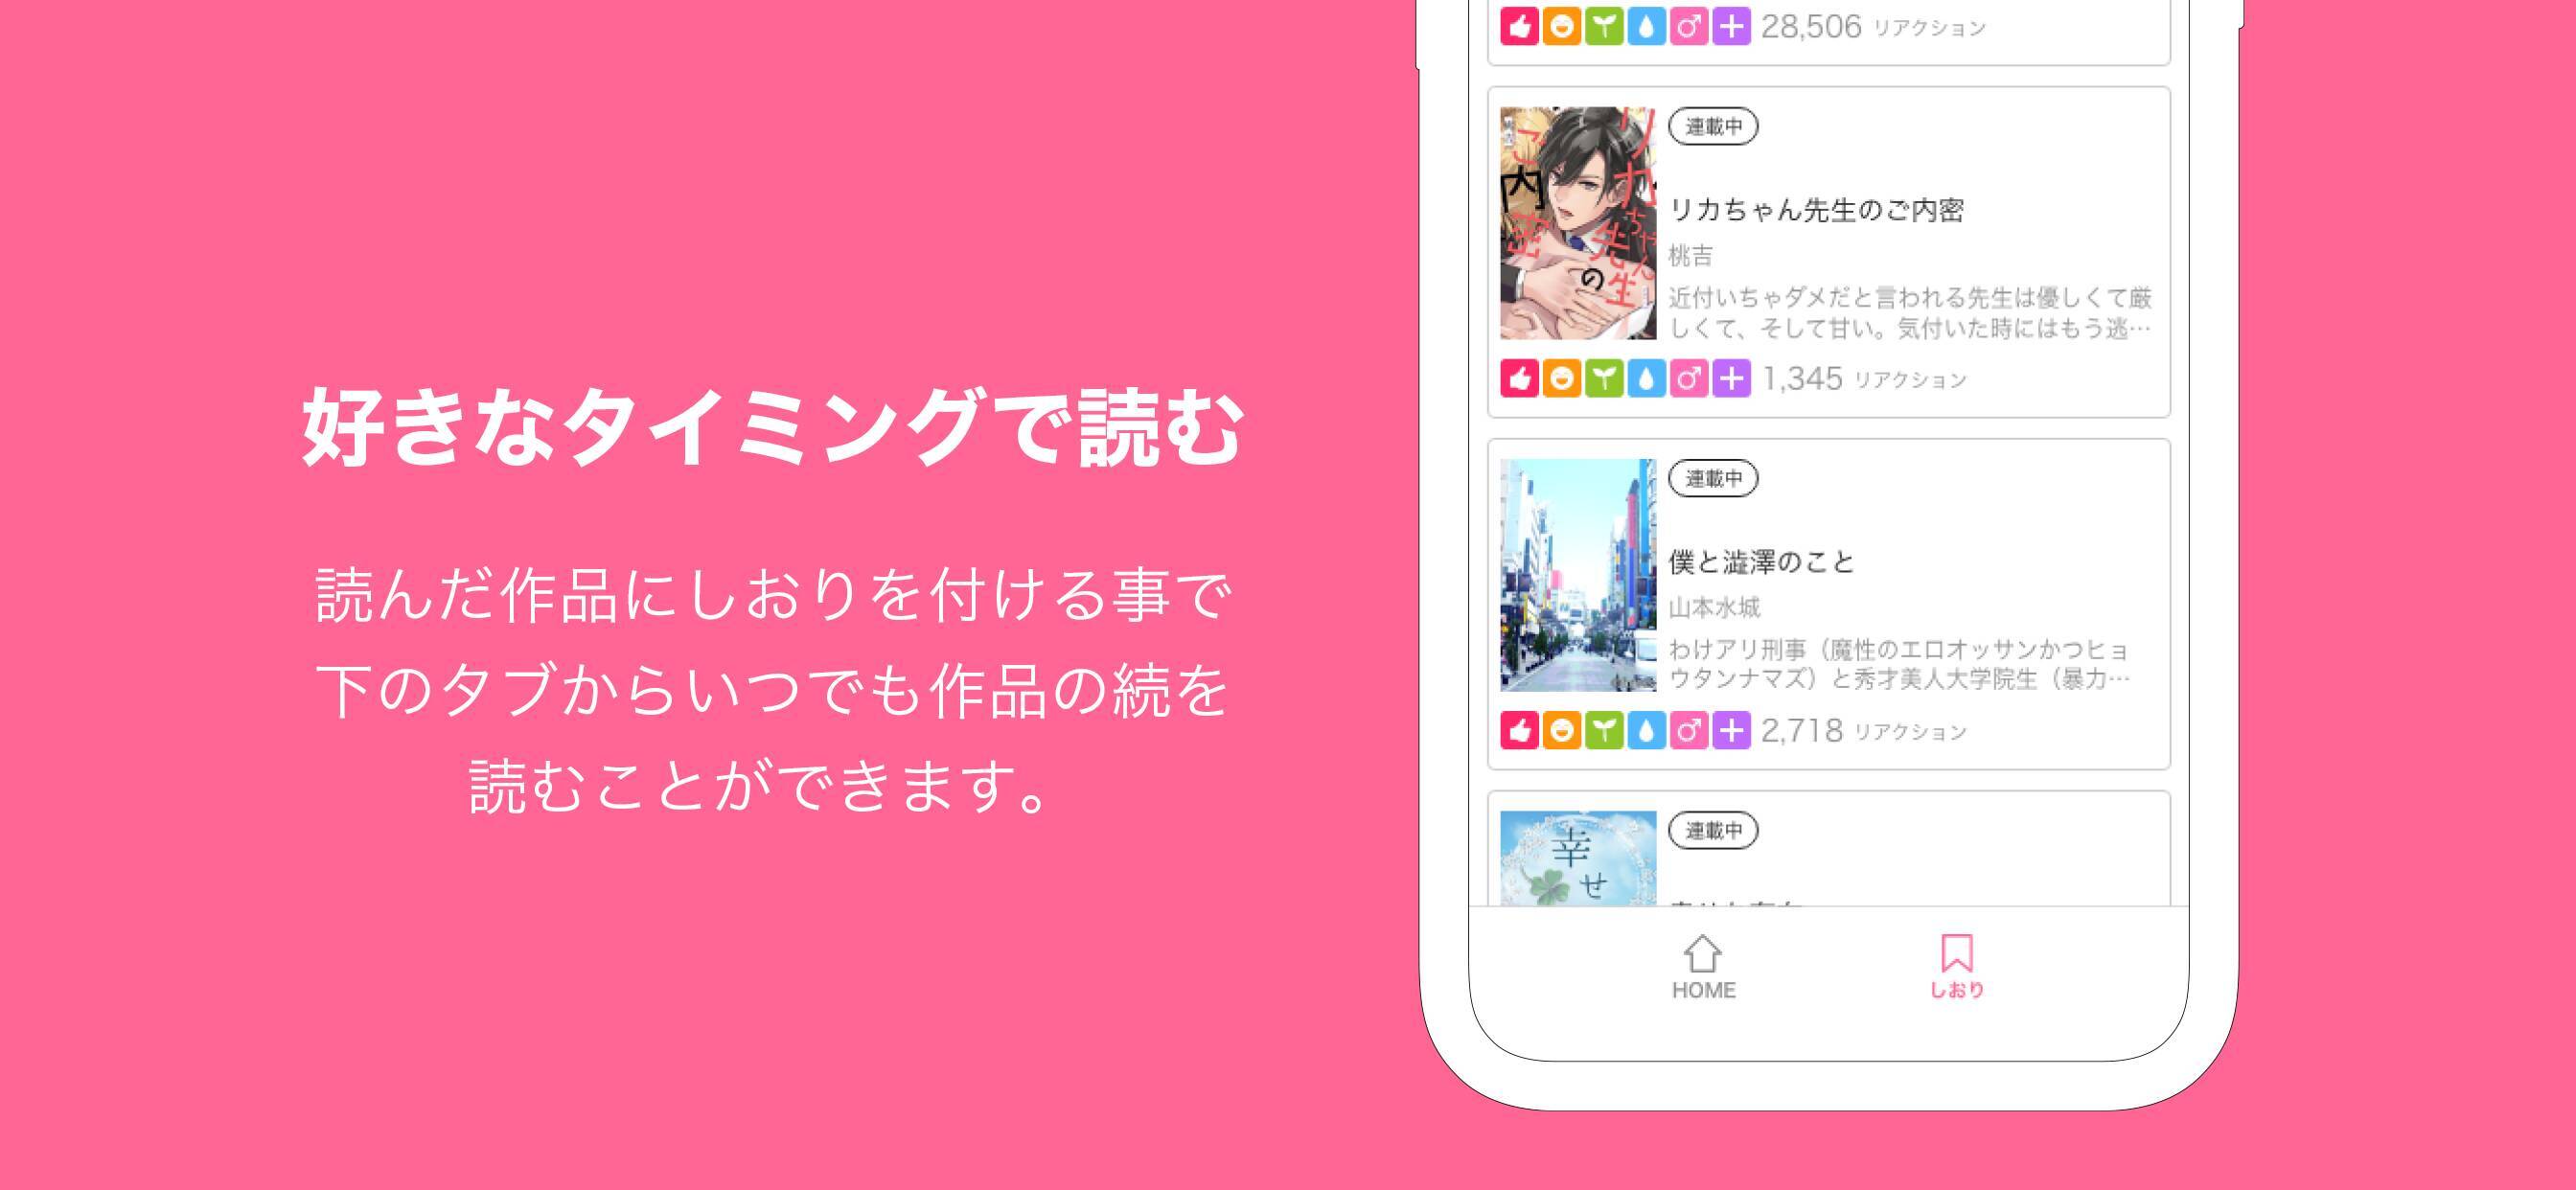 Bl小説やマンガを楽しめる投稿サイト Fujossy Ios版無料アプリリリース 年6月15日 エキサイトニュース